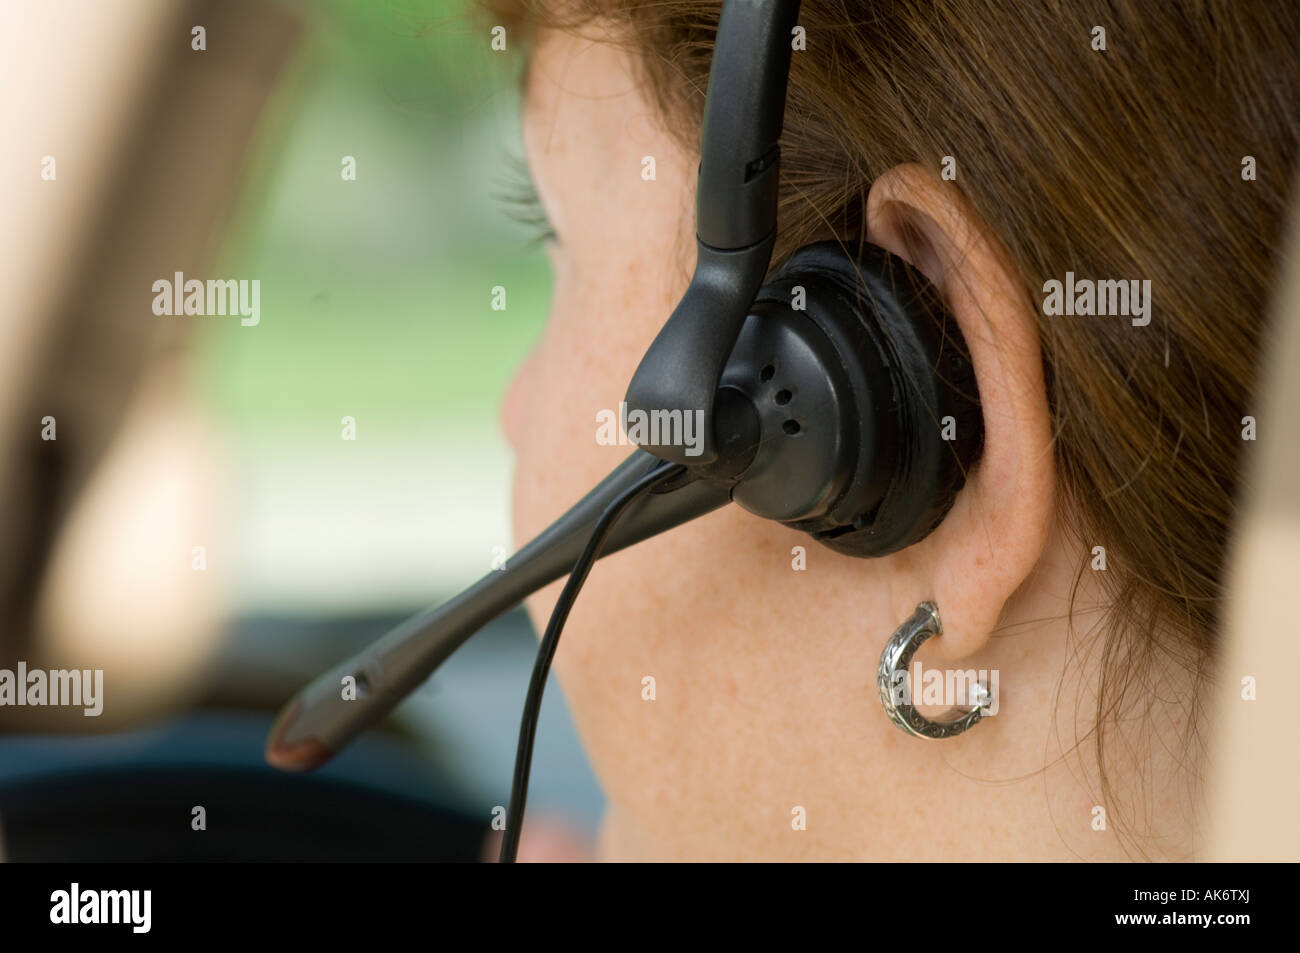 junge Frau am Handy Kopfhörer im Auto Stockfoto